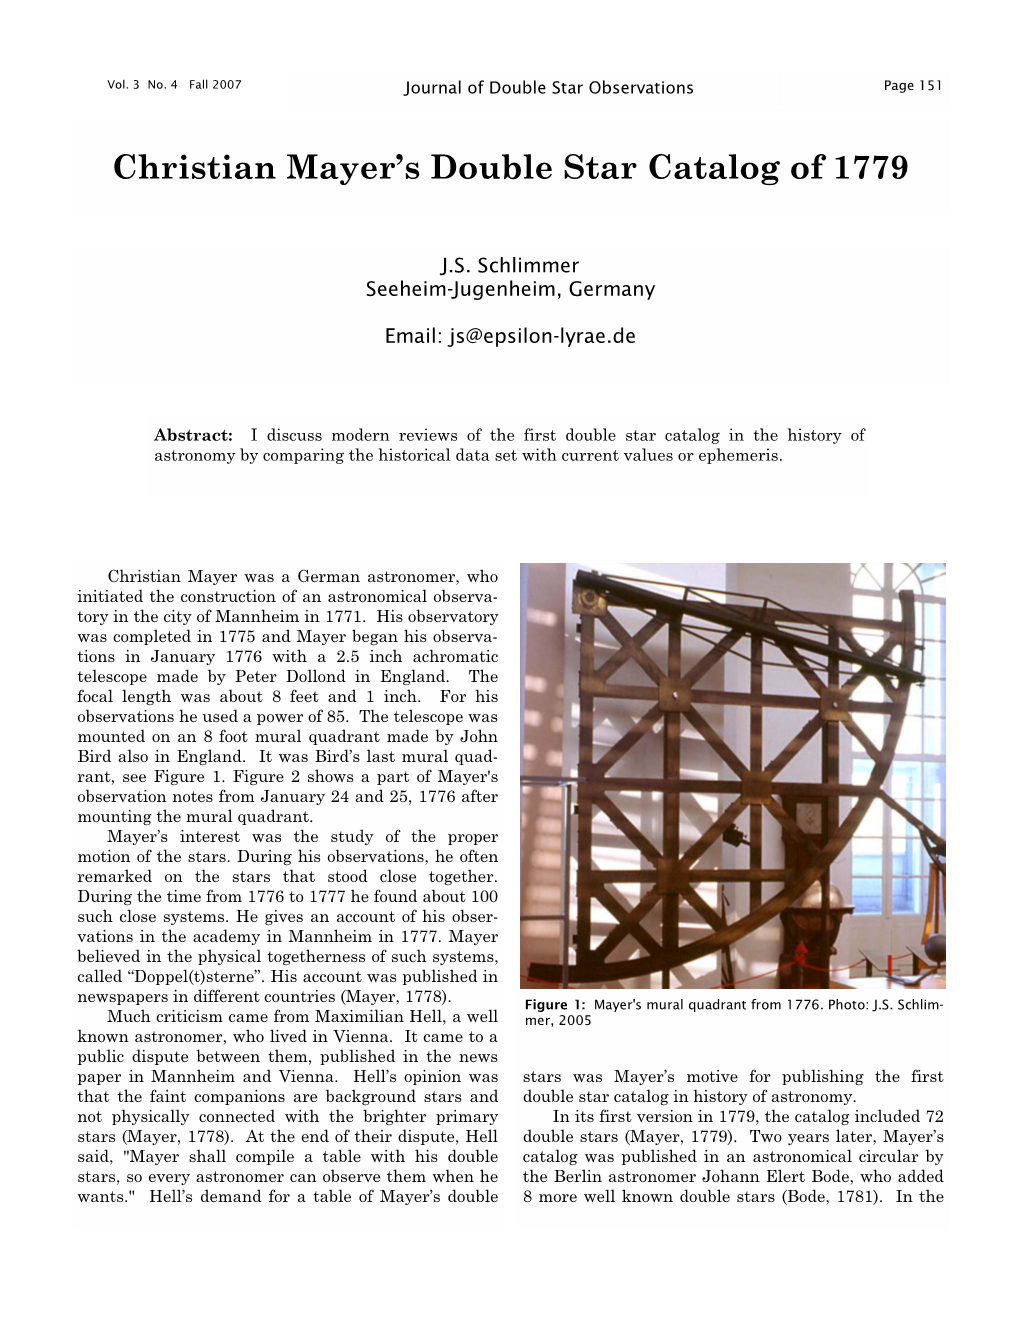 Christian Mayer's Double Star Catalog of 1779